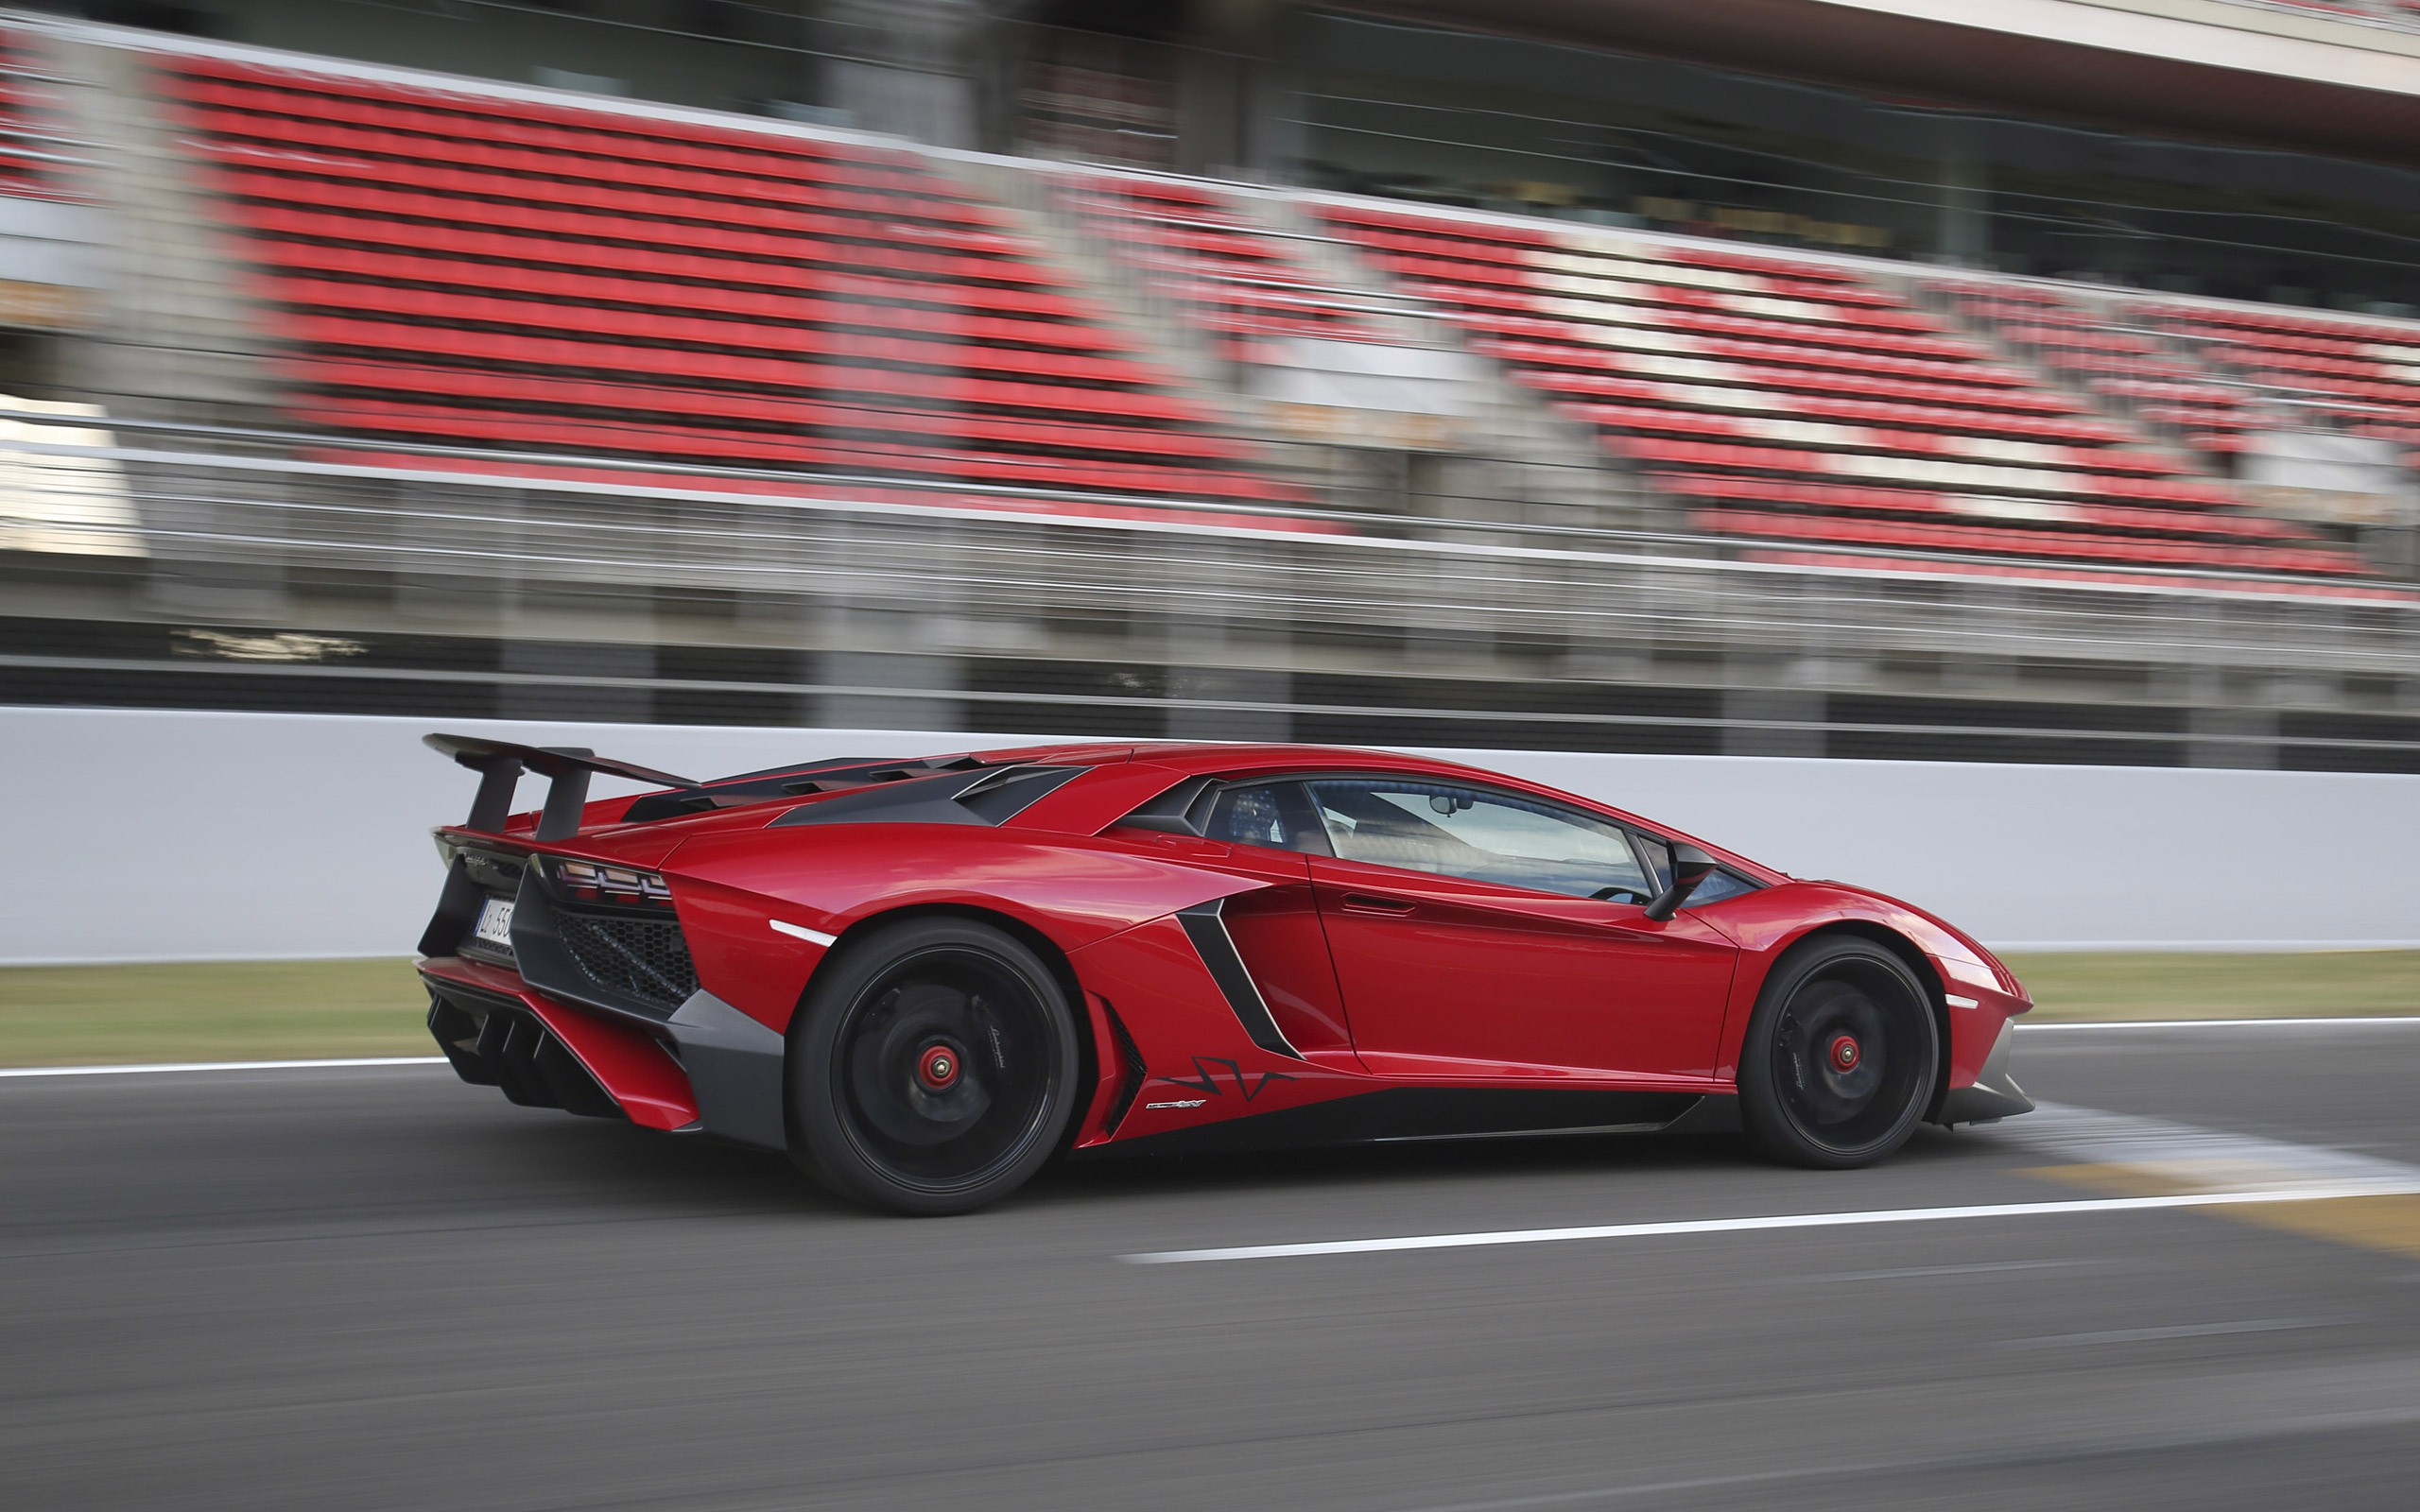 General 2560x1600 car race tracks motion blur Lamborghini Aventador Lamborghini red cars supercars vehicle